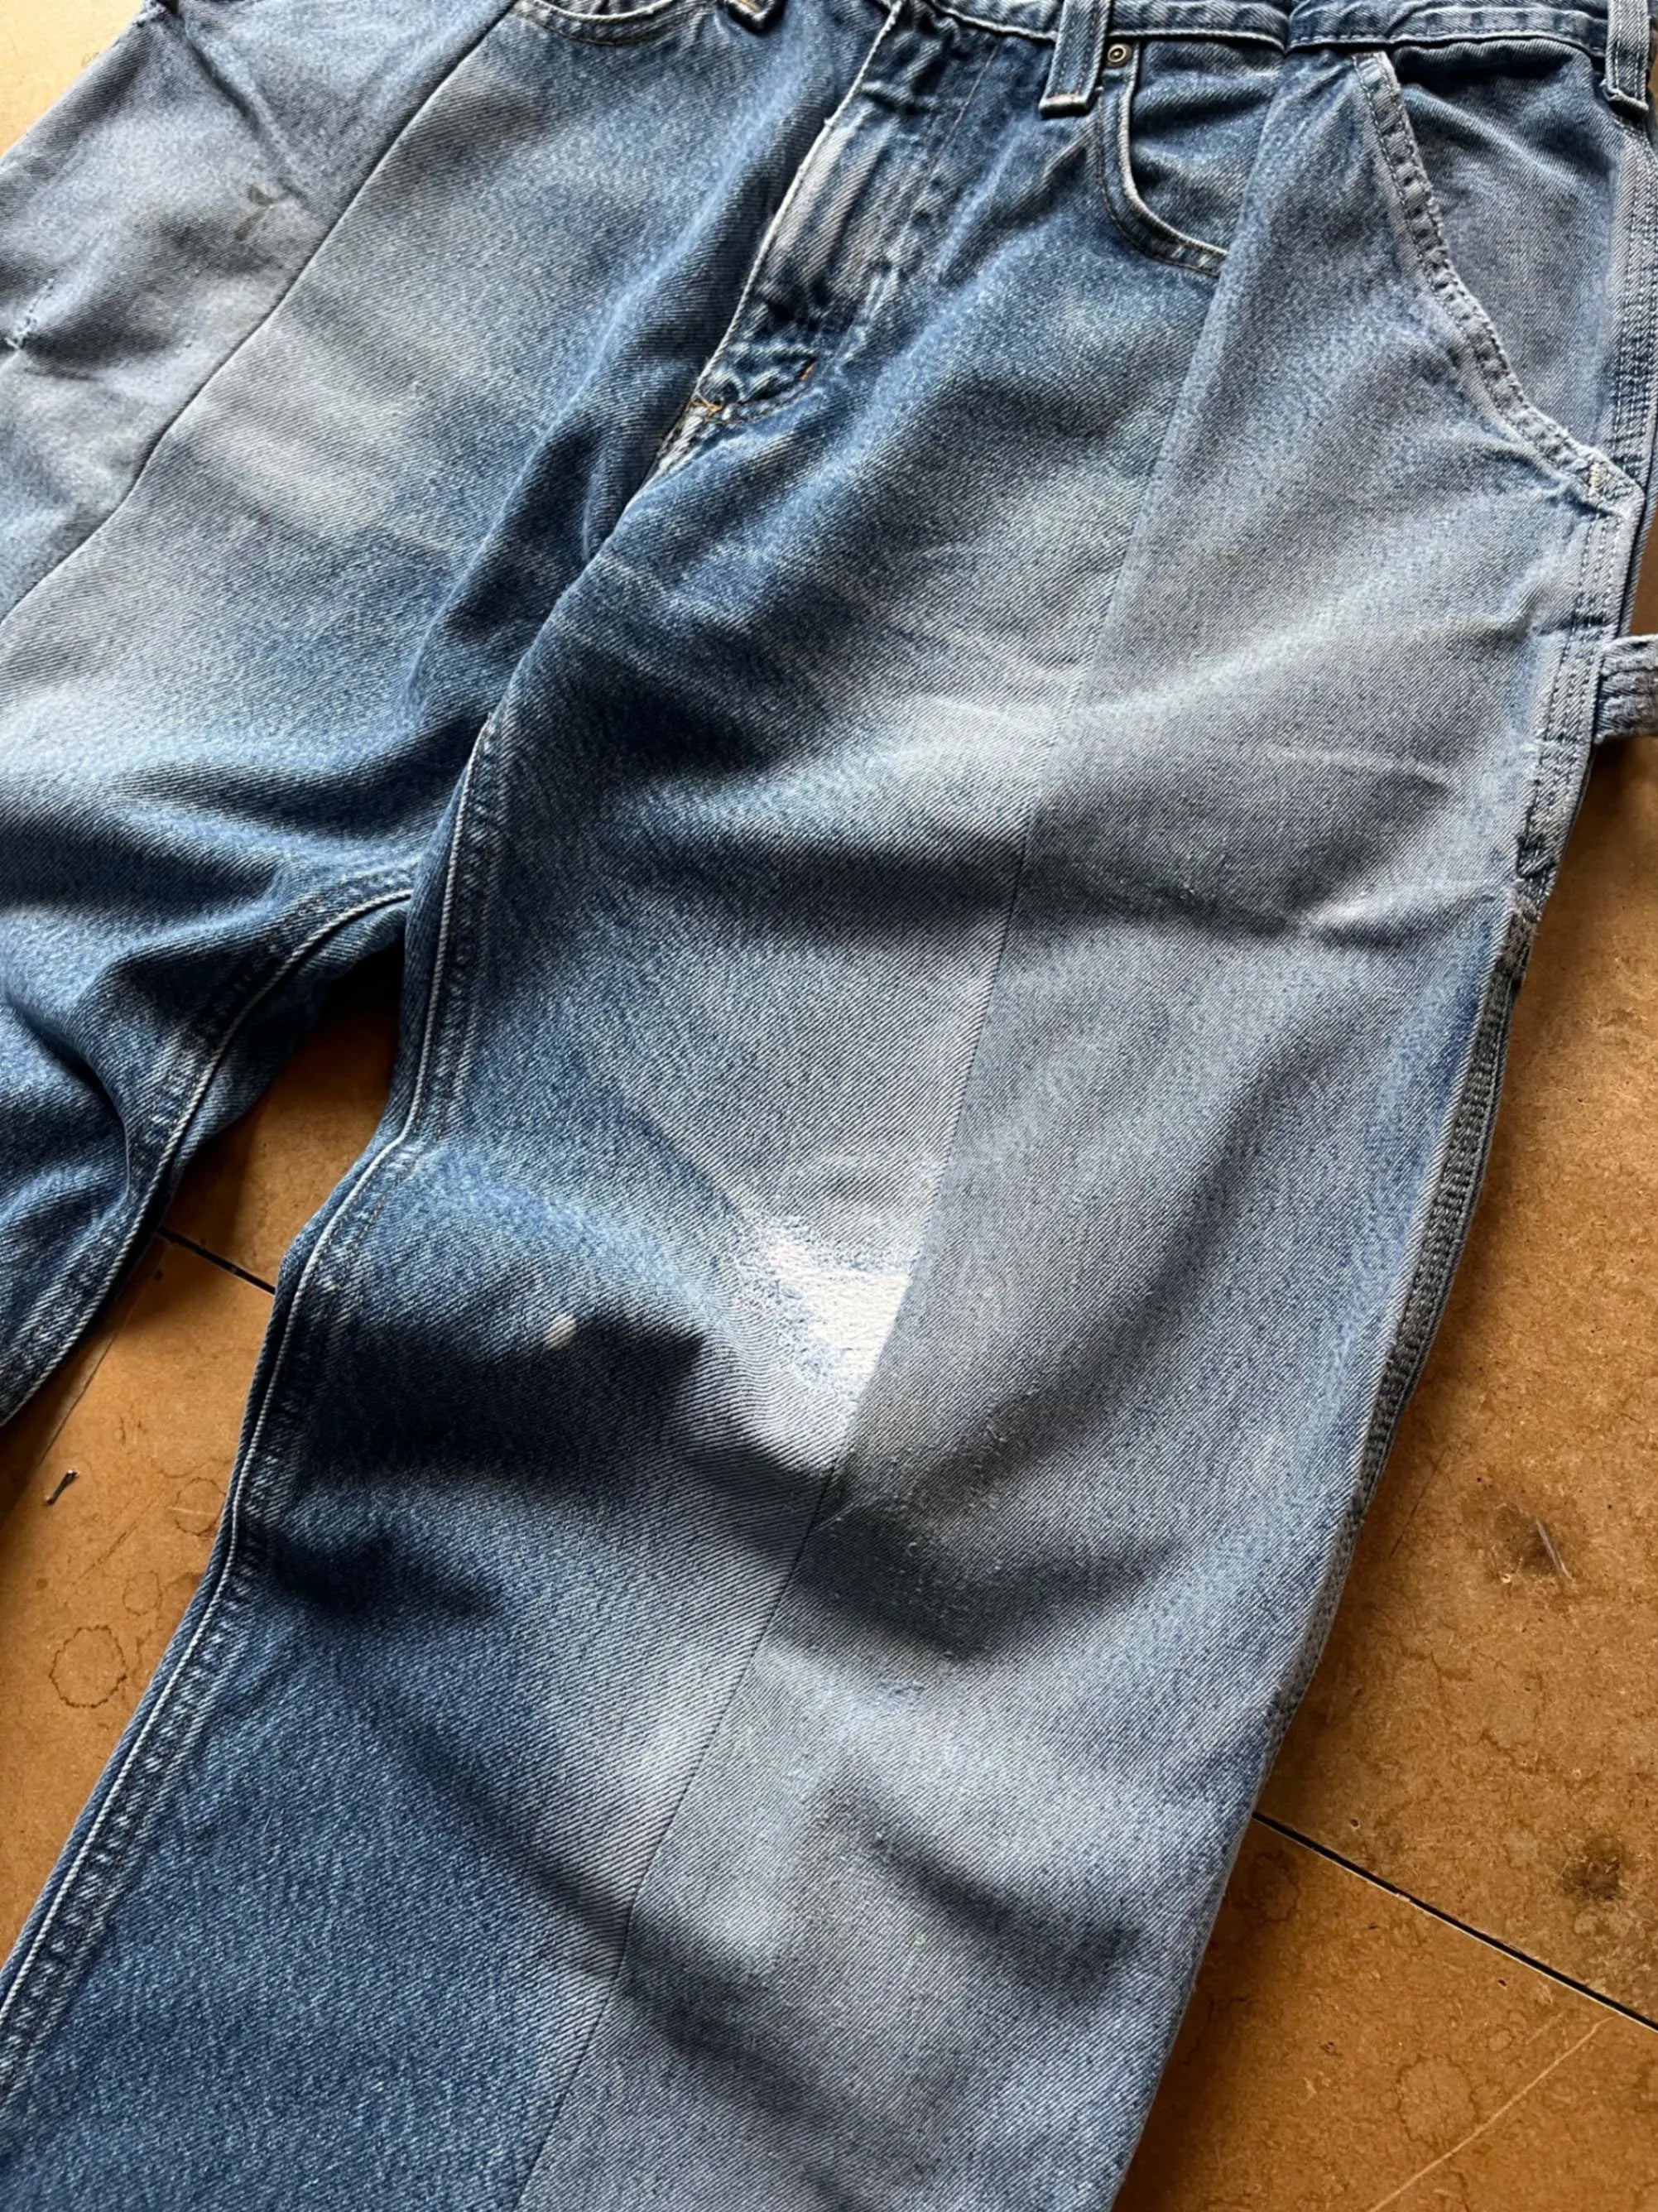 Carhartt X NoahJeans Jeans - 34W30L